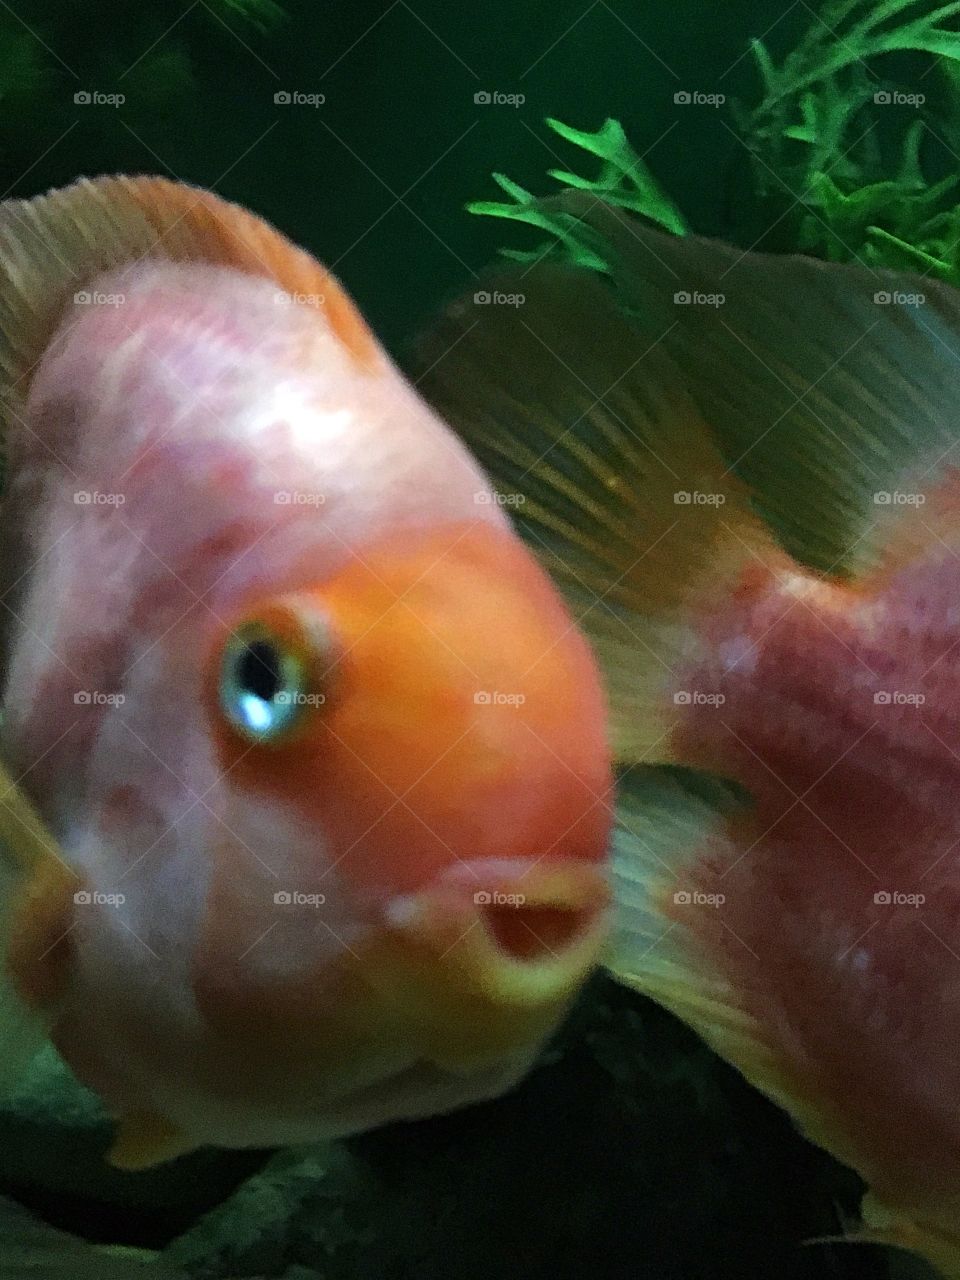 Happy fish